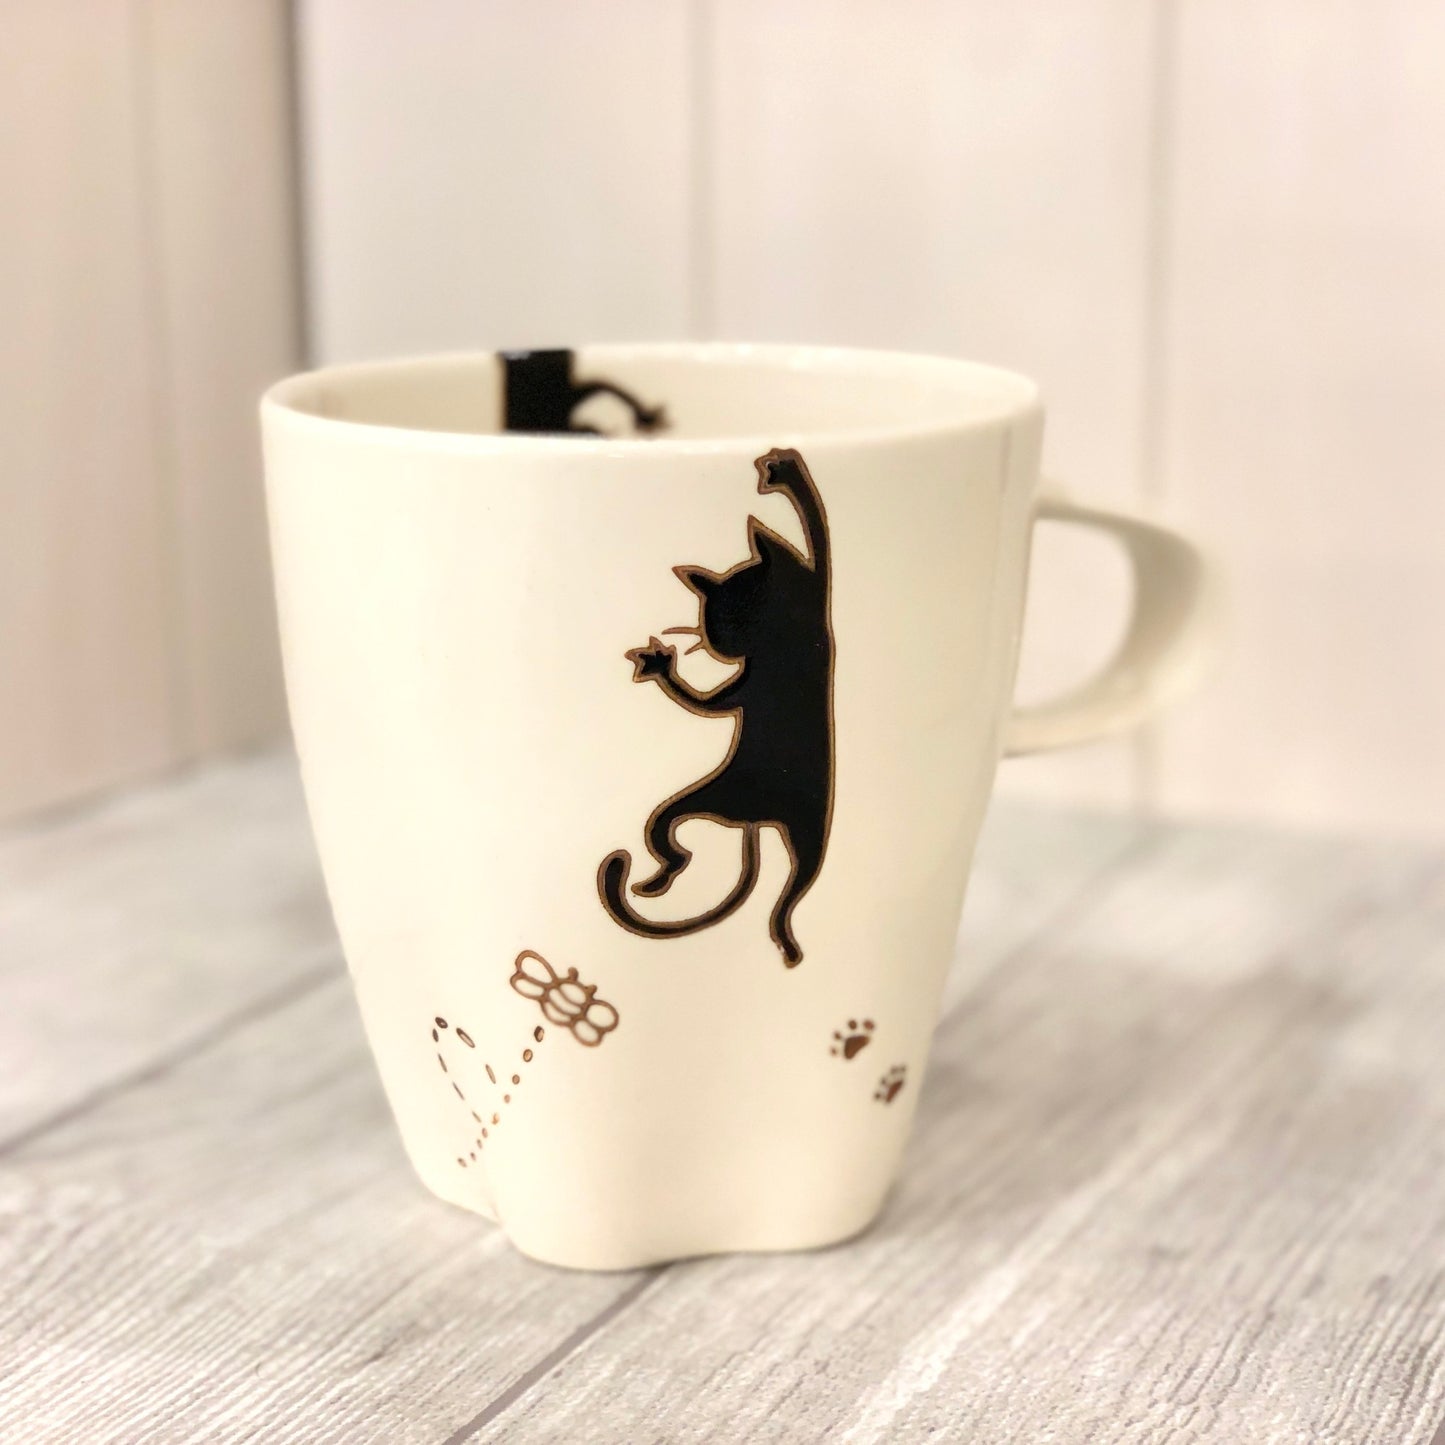 [Kikusho 陶器] [Hasami ware] [挂猫] [爪子马克杯] (Mike Kuro) 猫图案可爱光印花布猫黑猫